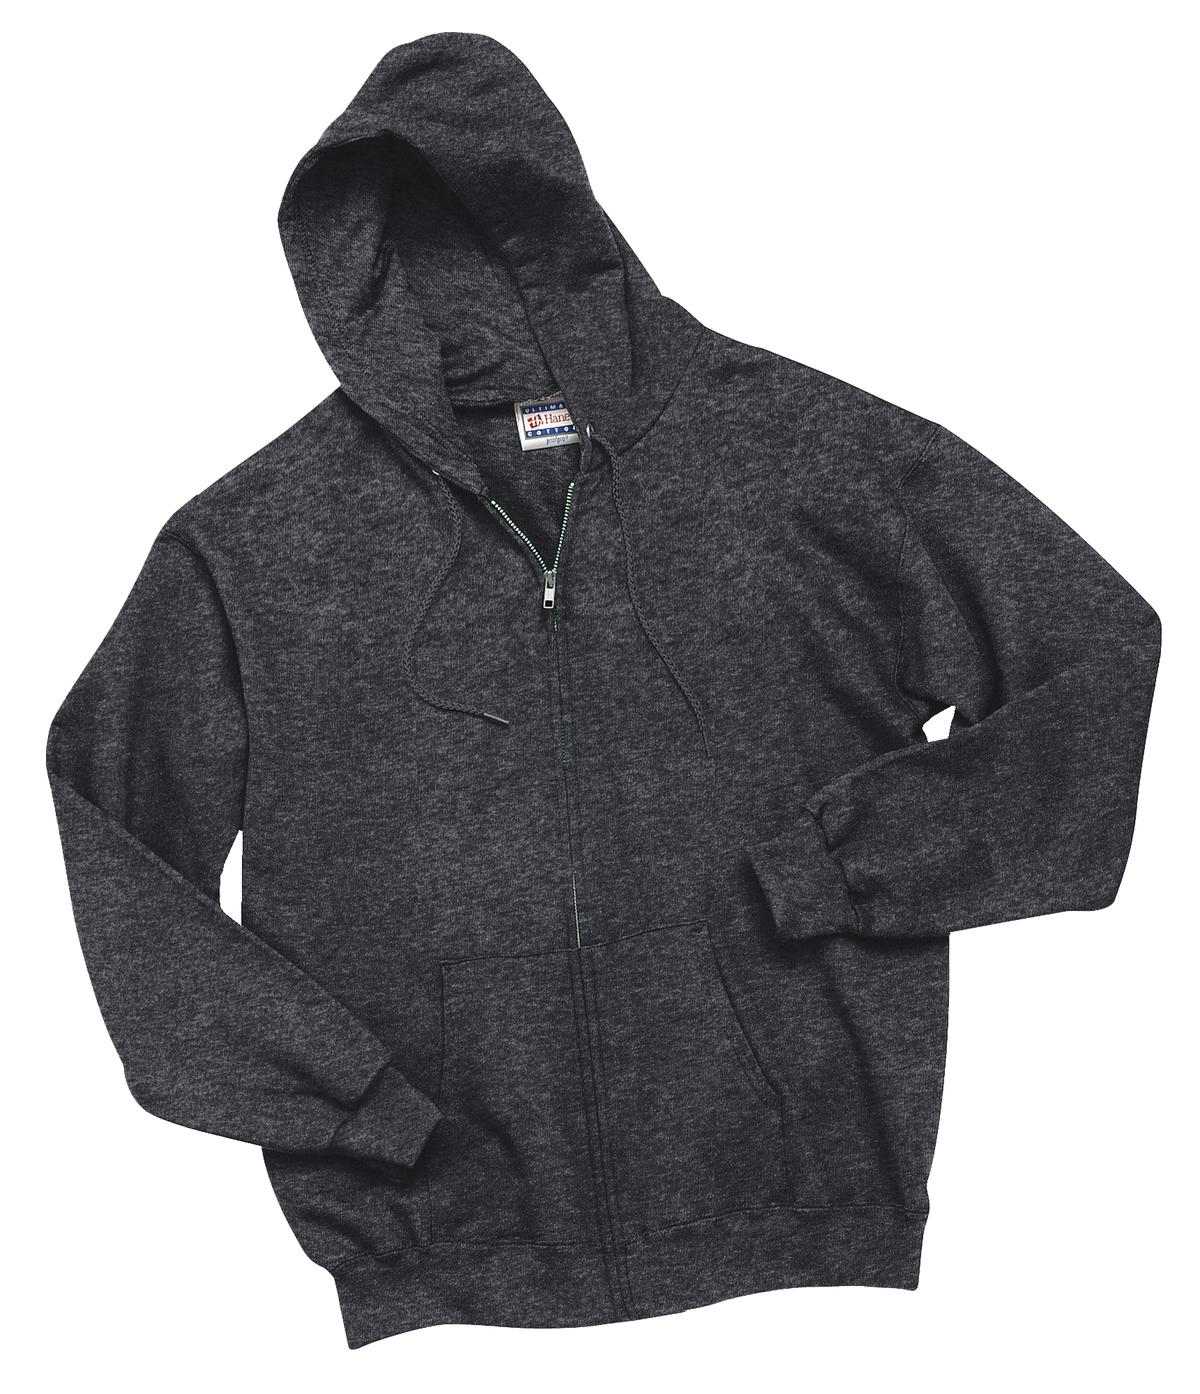 Hanes F283 Ultimate Cotton Full-Zip Hooded Sweatshirt - Charcoal Heather - HIT a Double